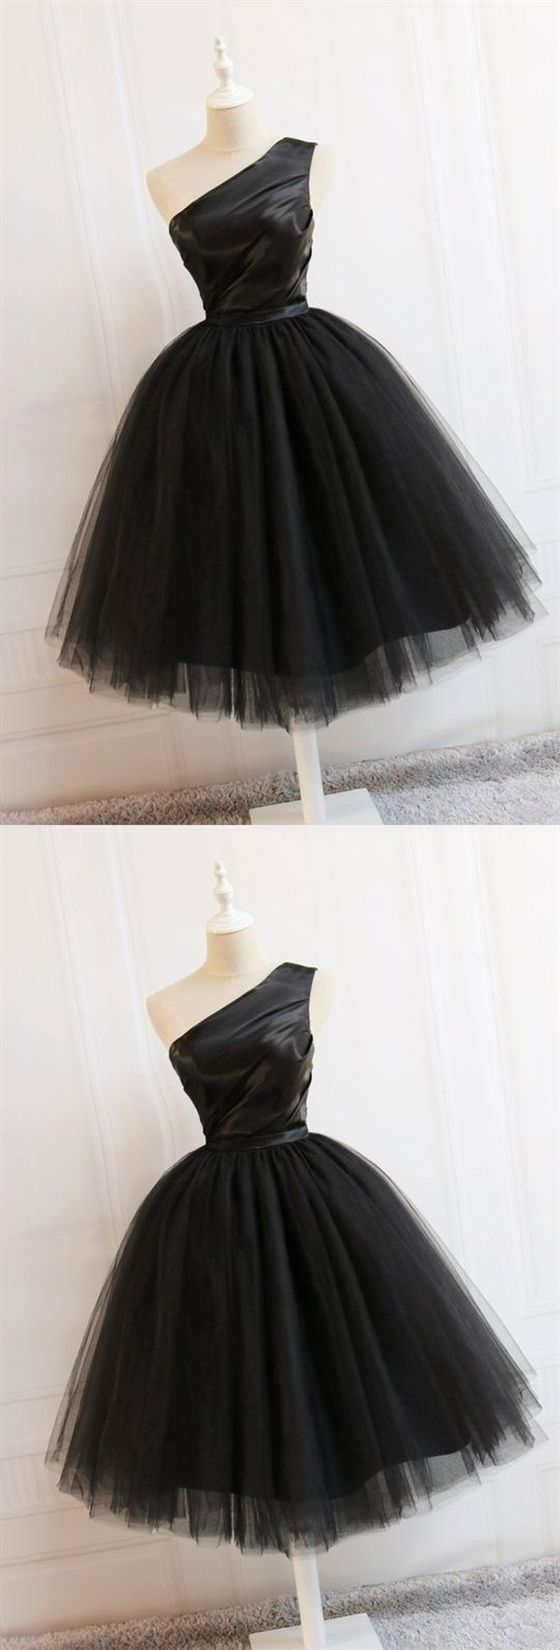 Simple Black One Shoulder A Line Homecoming Dresses Short Dresses cg1681